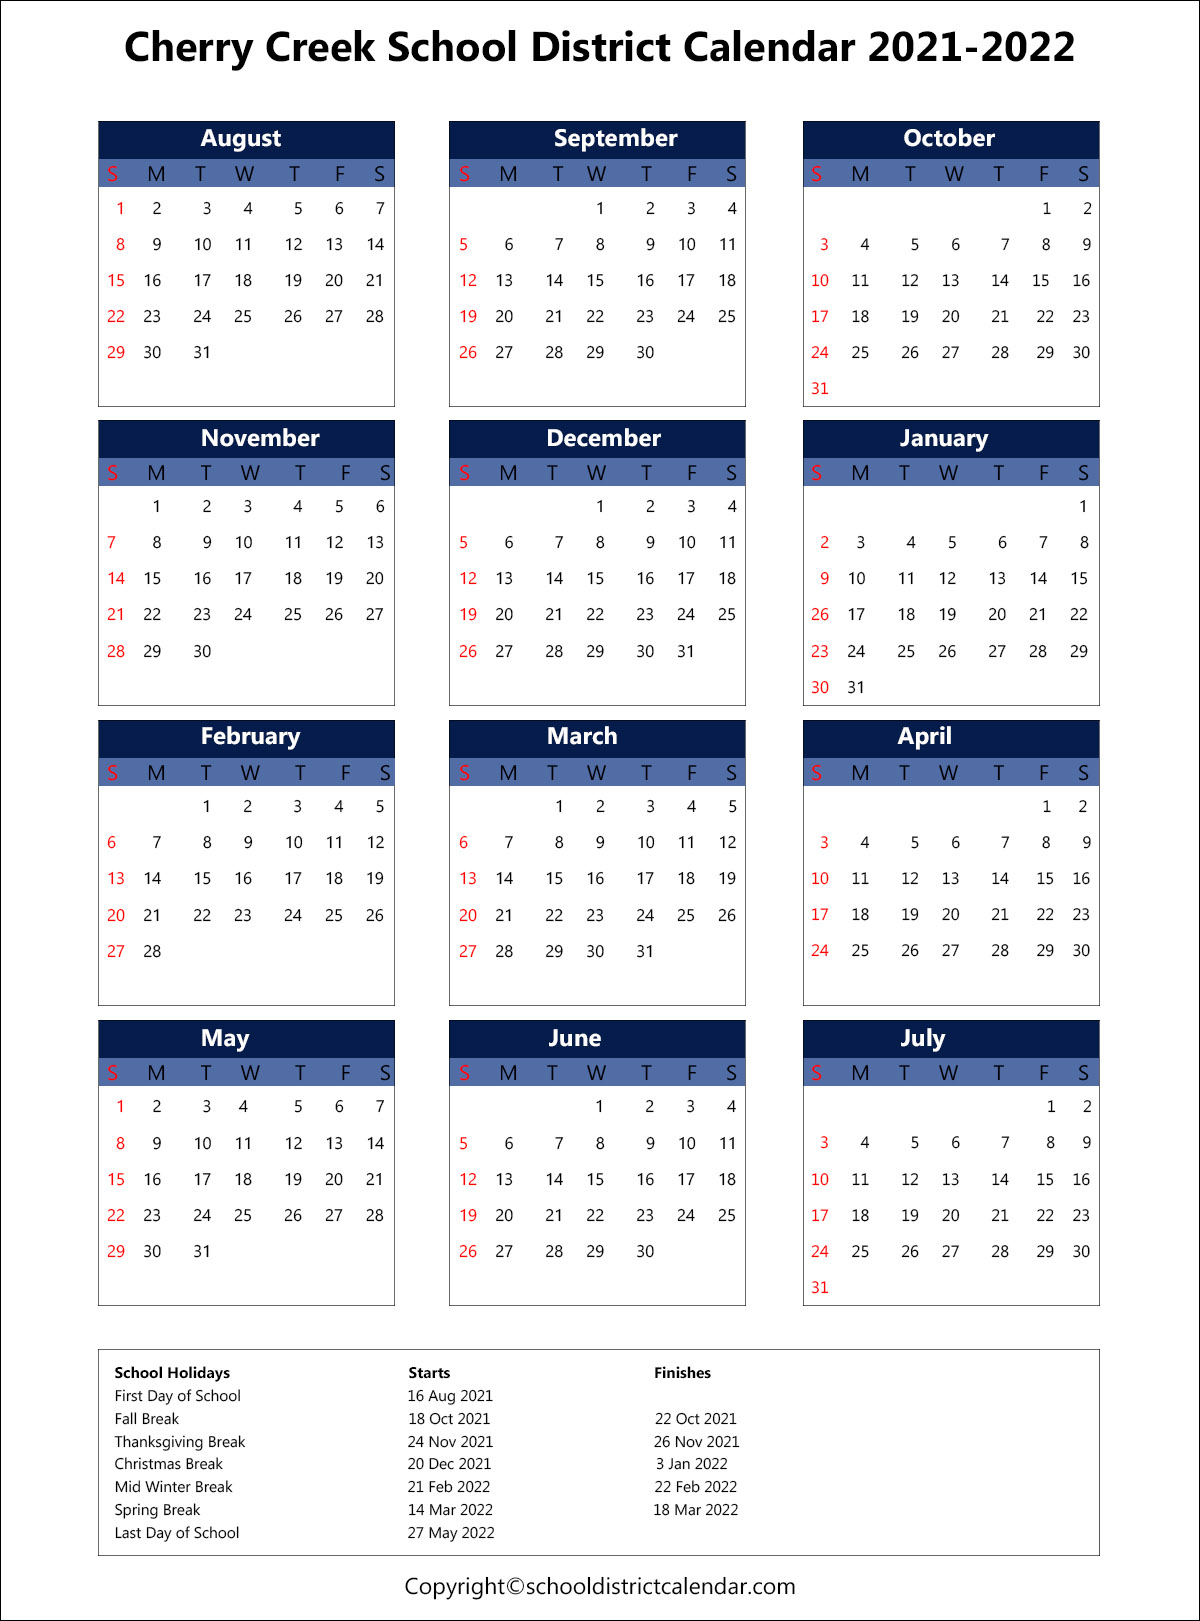 Cherry Creek School District Calendar 2021